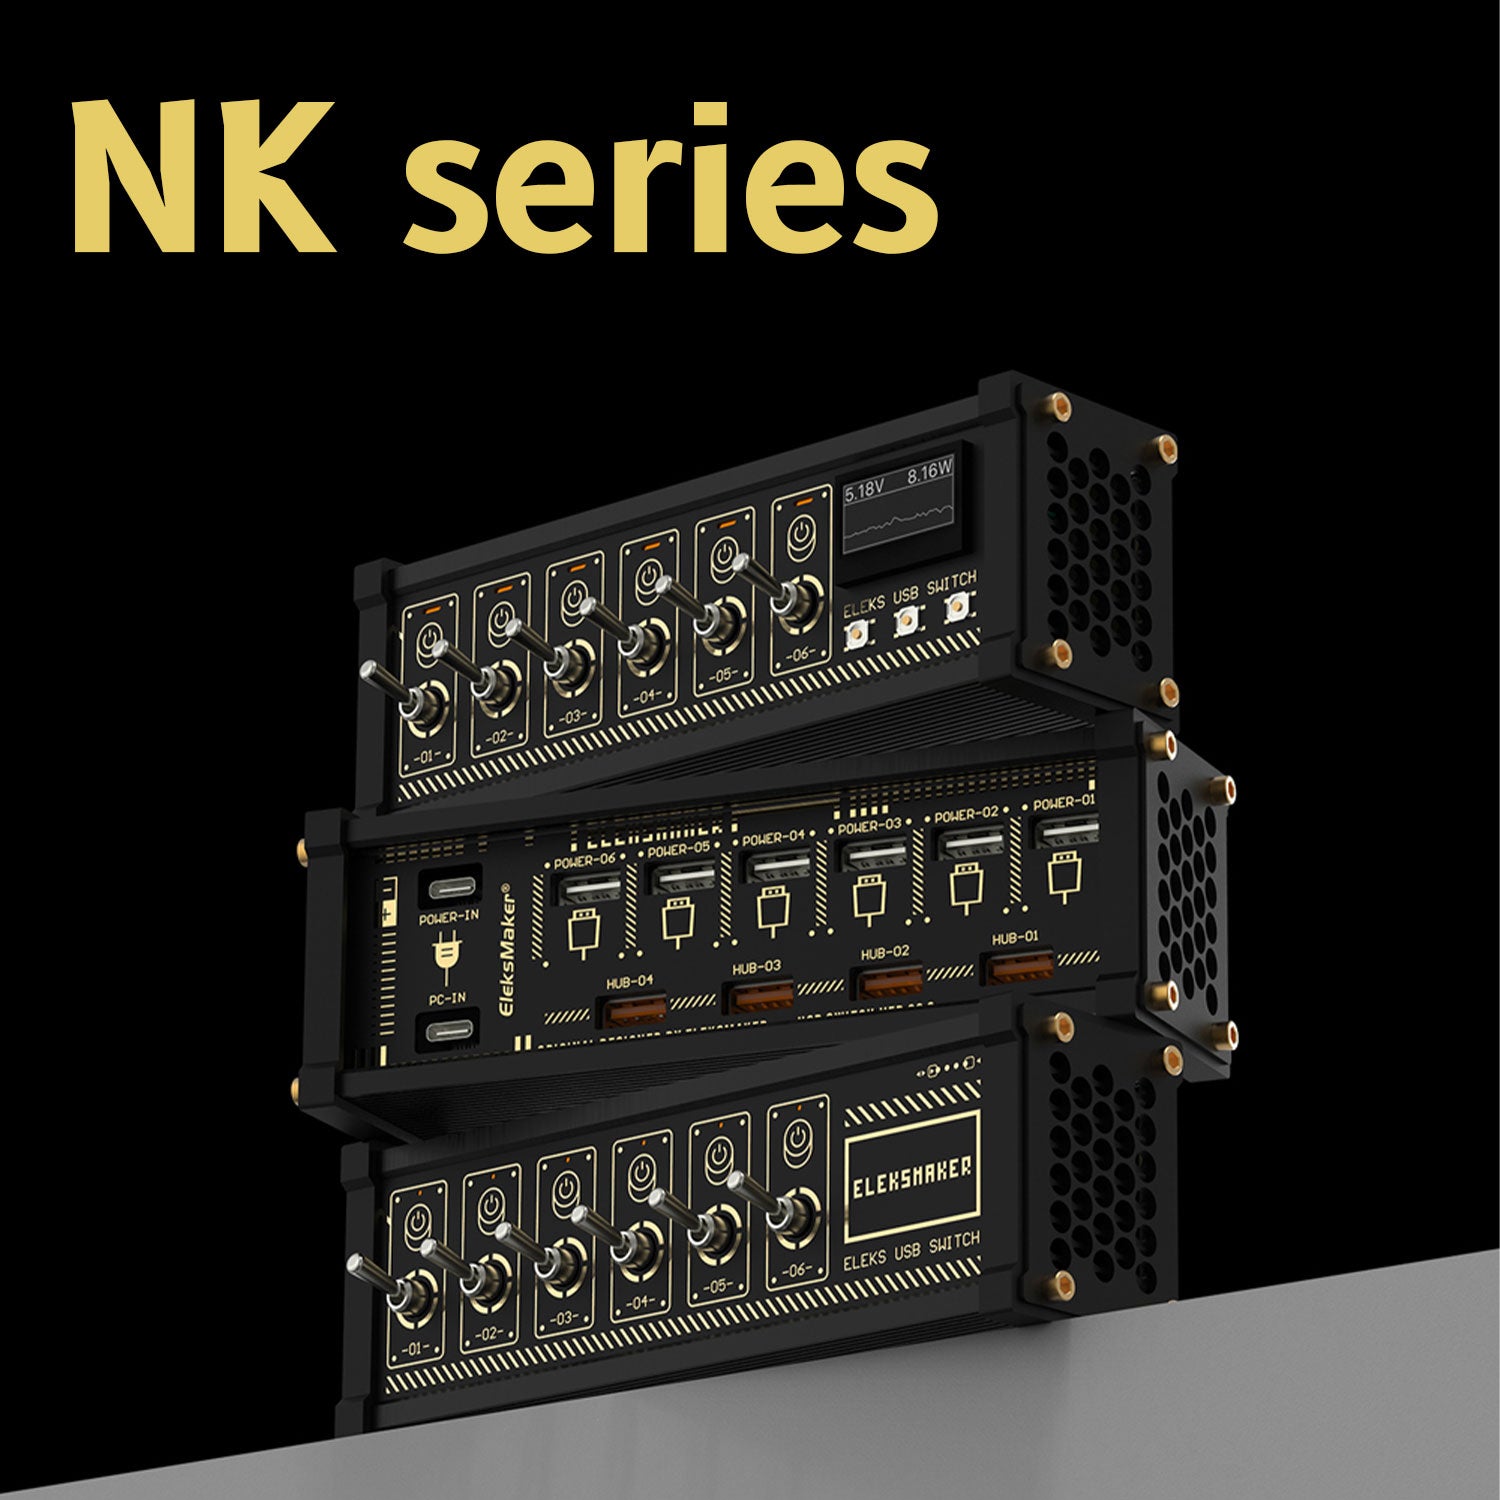 Eleksmaker NK1 ELEKS USB Switch 6 Port USB Hub Gold-plated with Toggle  Switch